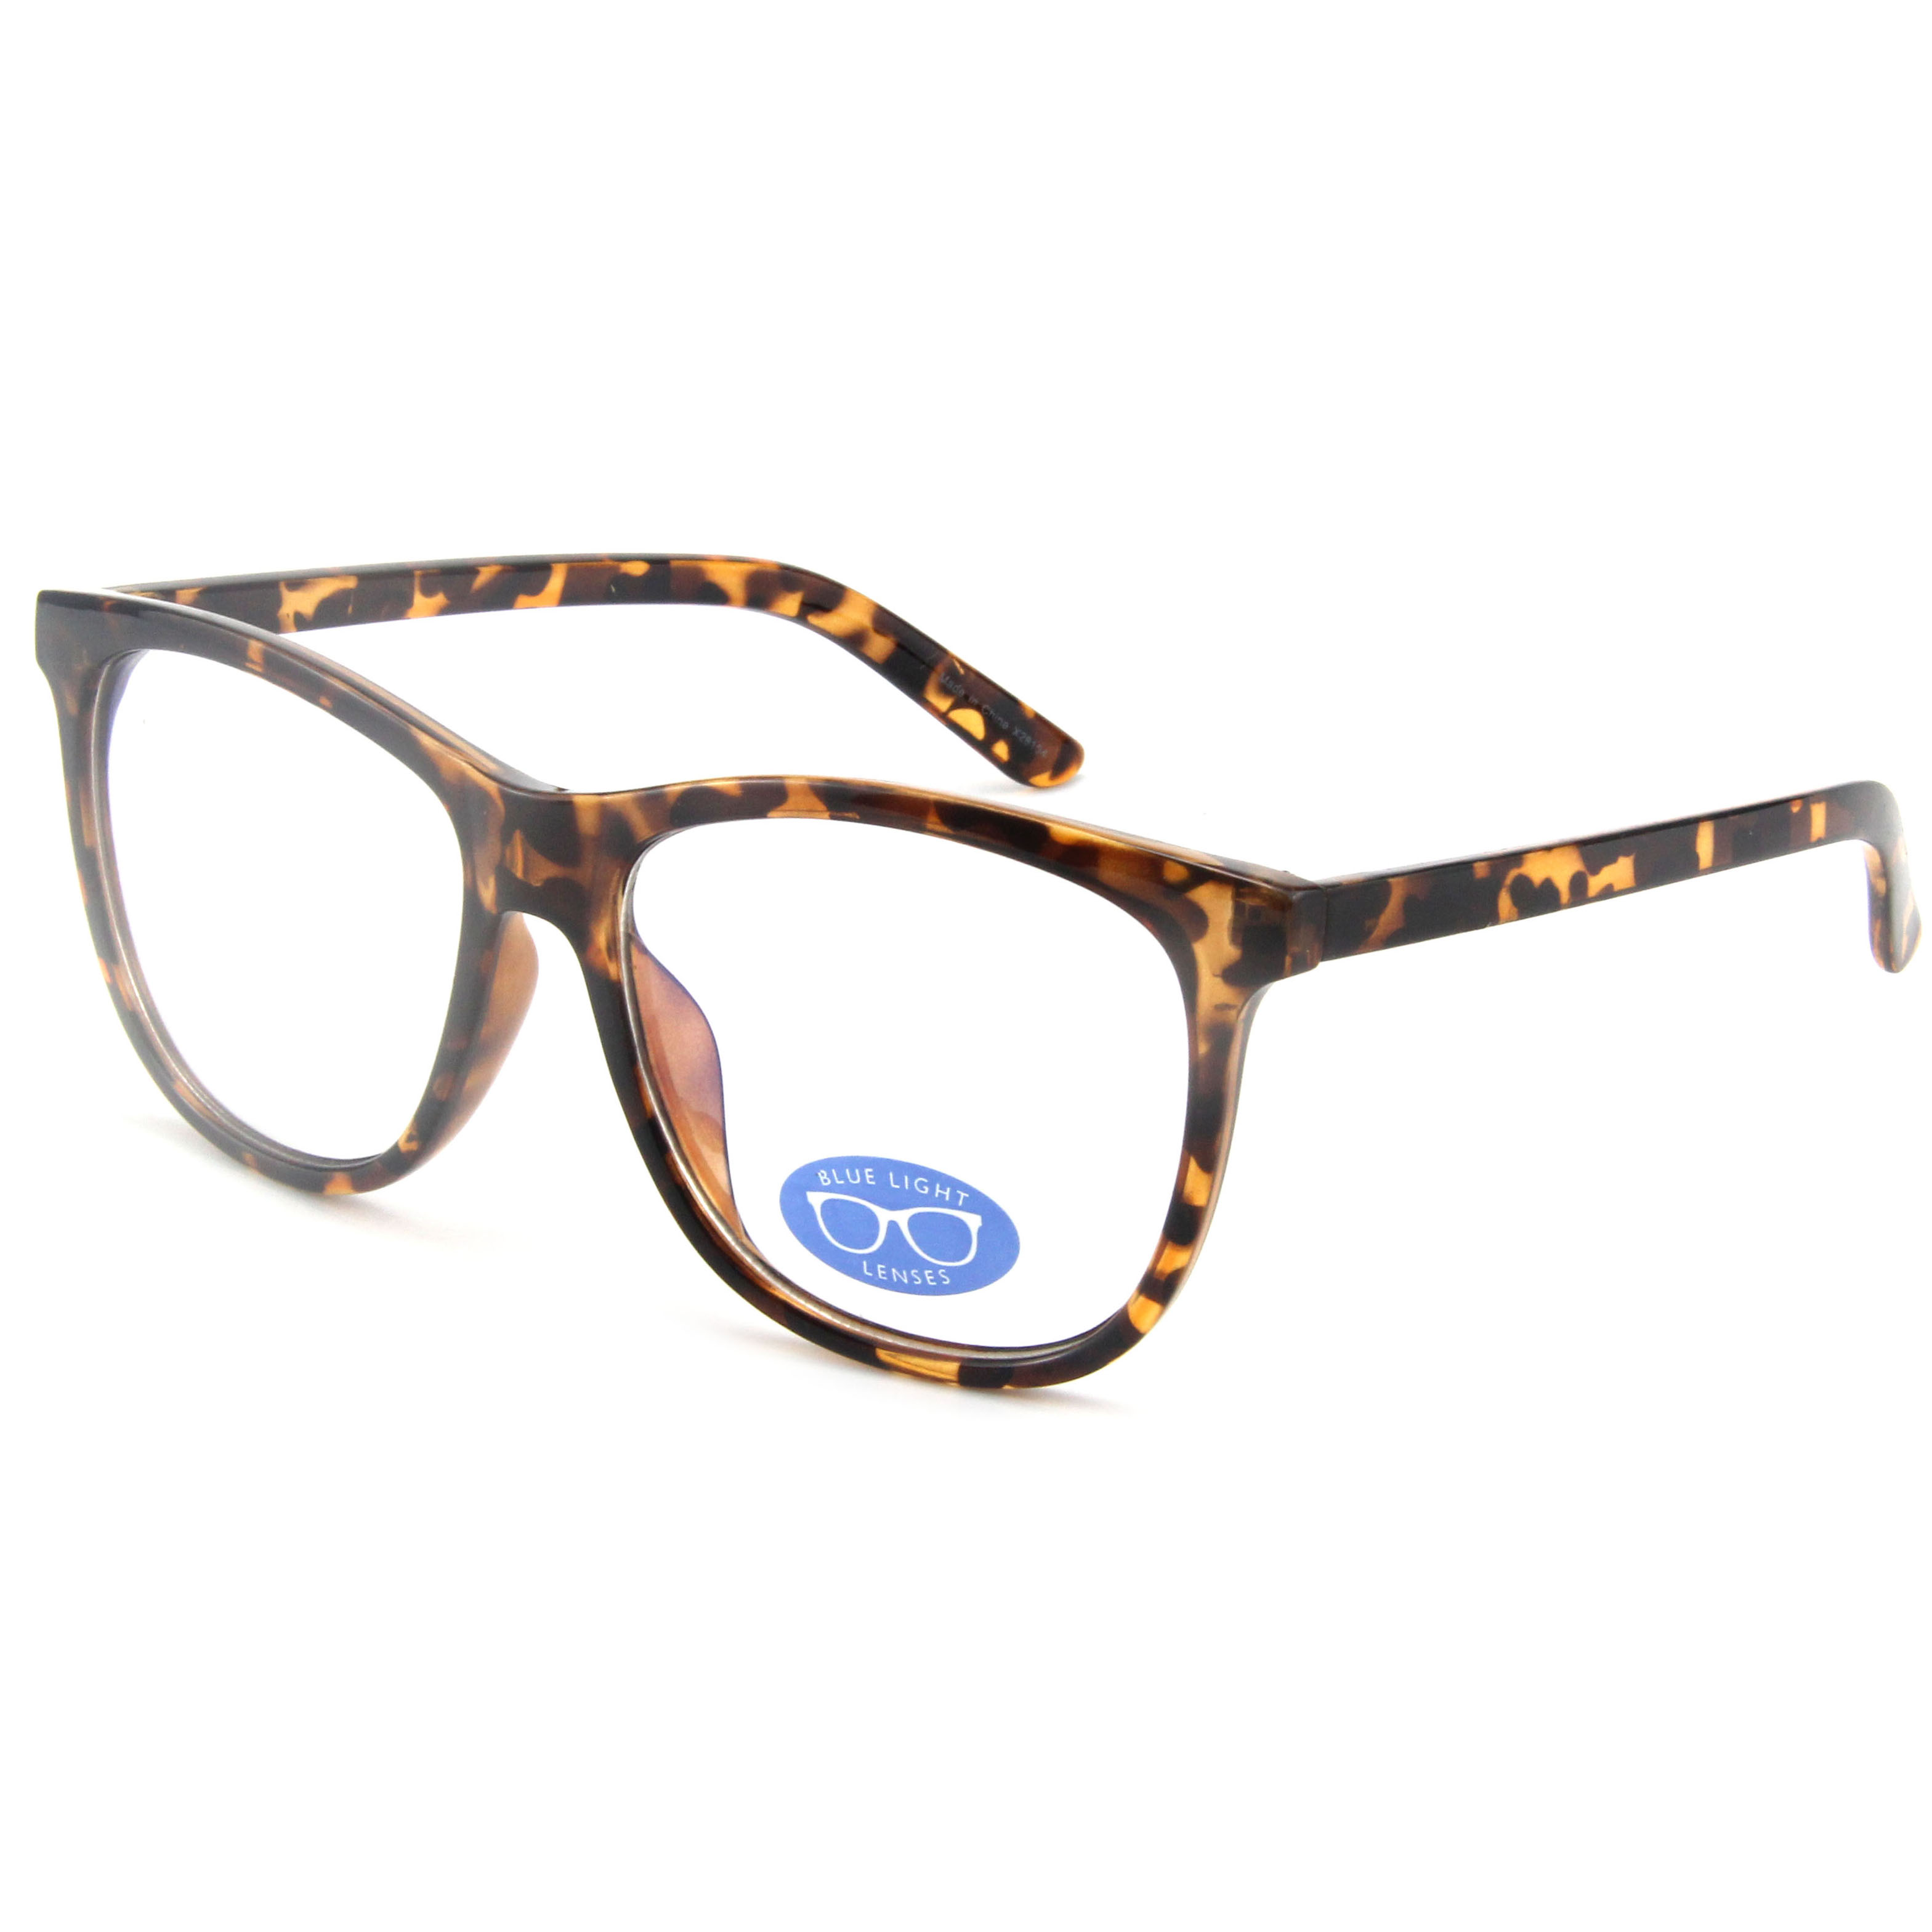 EUGENIA Design Eyeglasses Frames Eeglasses Optical Square Eyeglasses